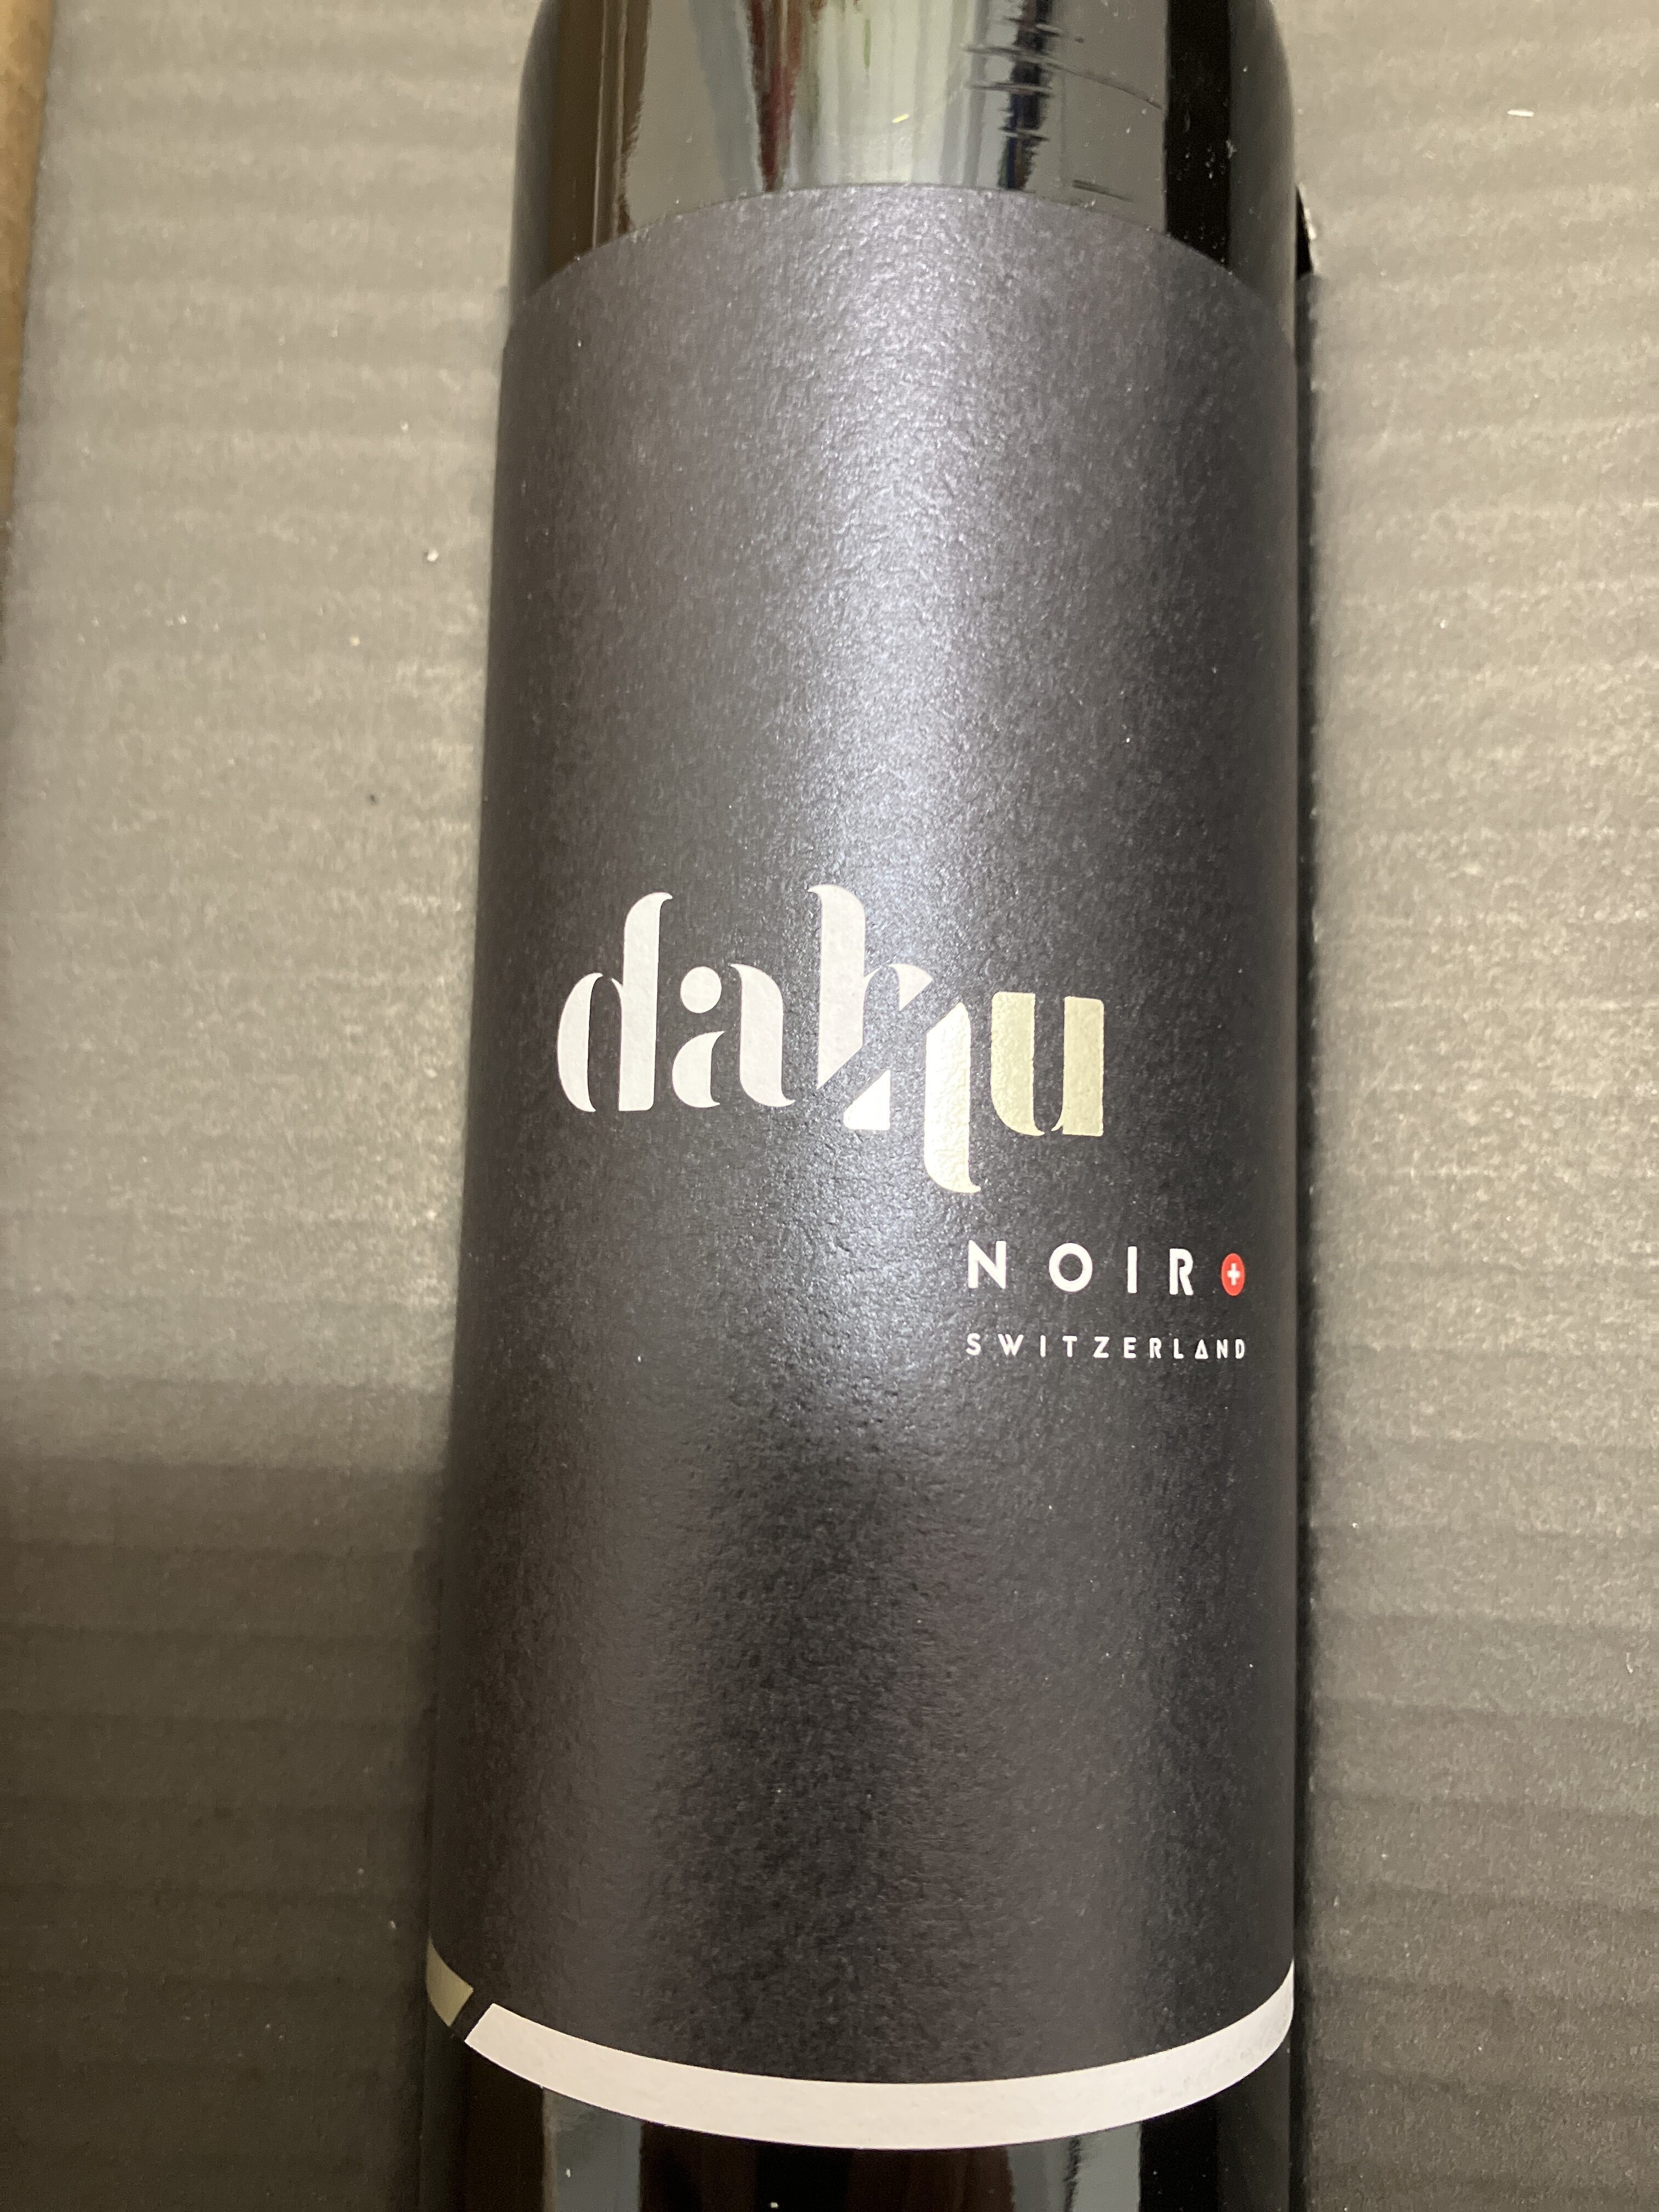 Dahu noir - Product - fr